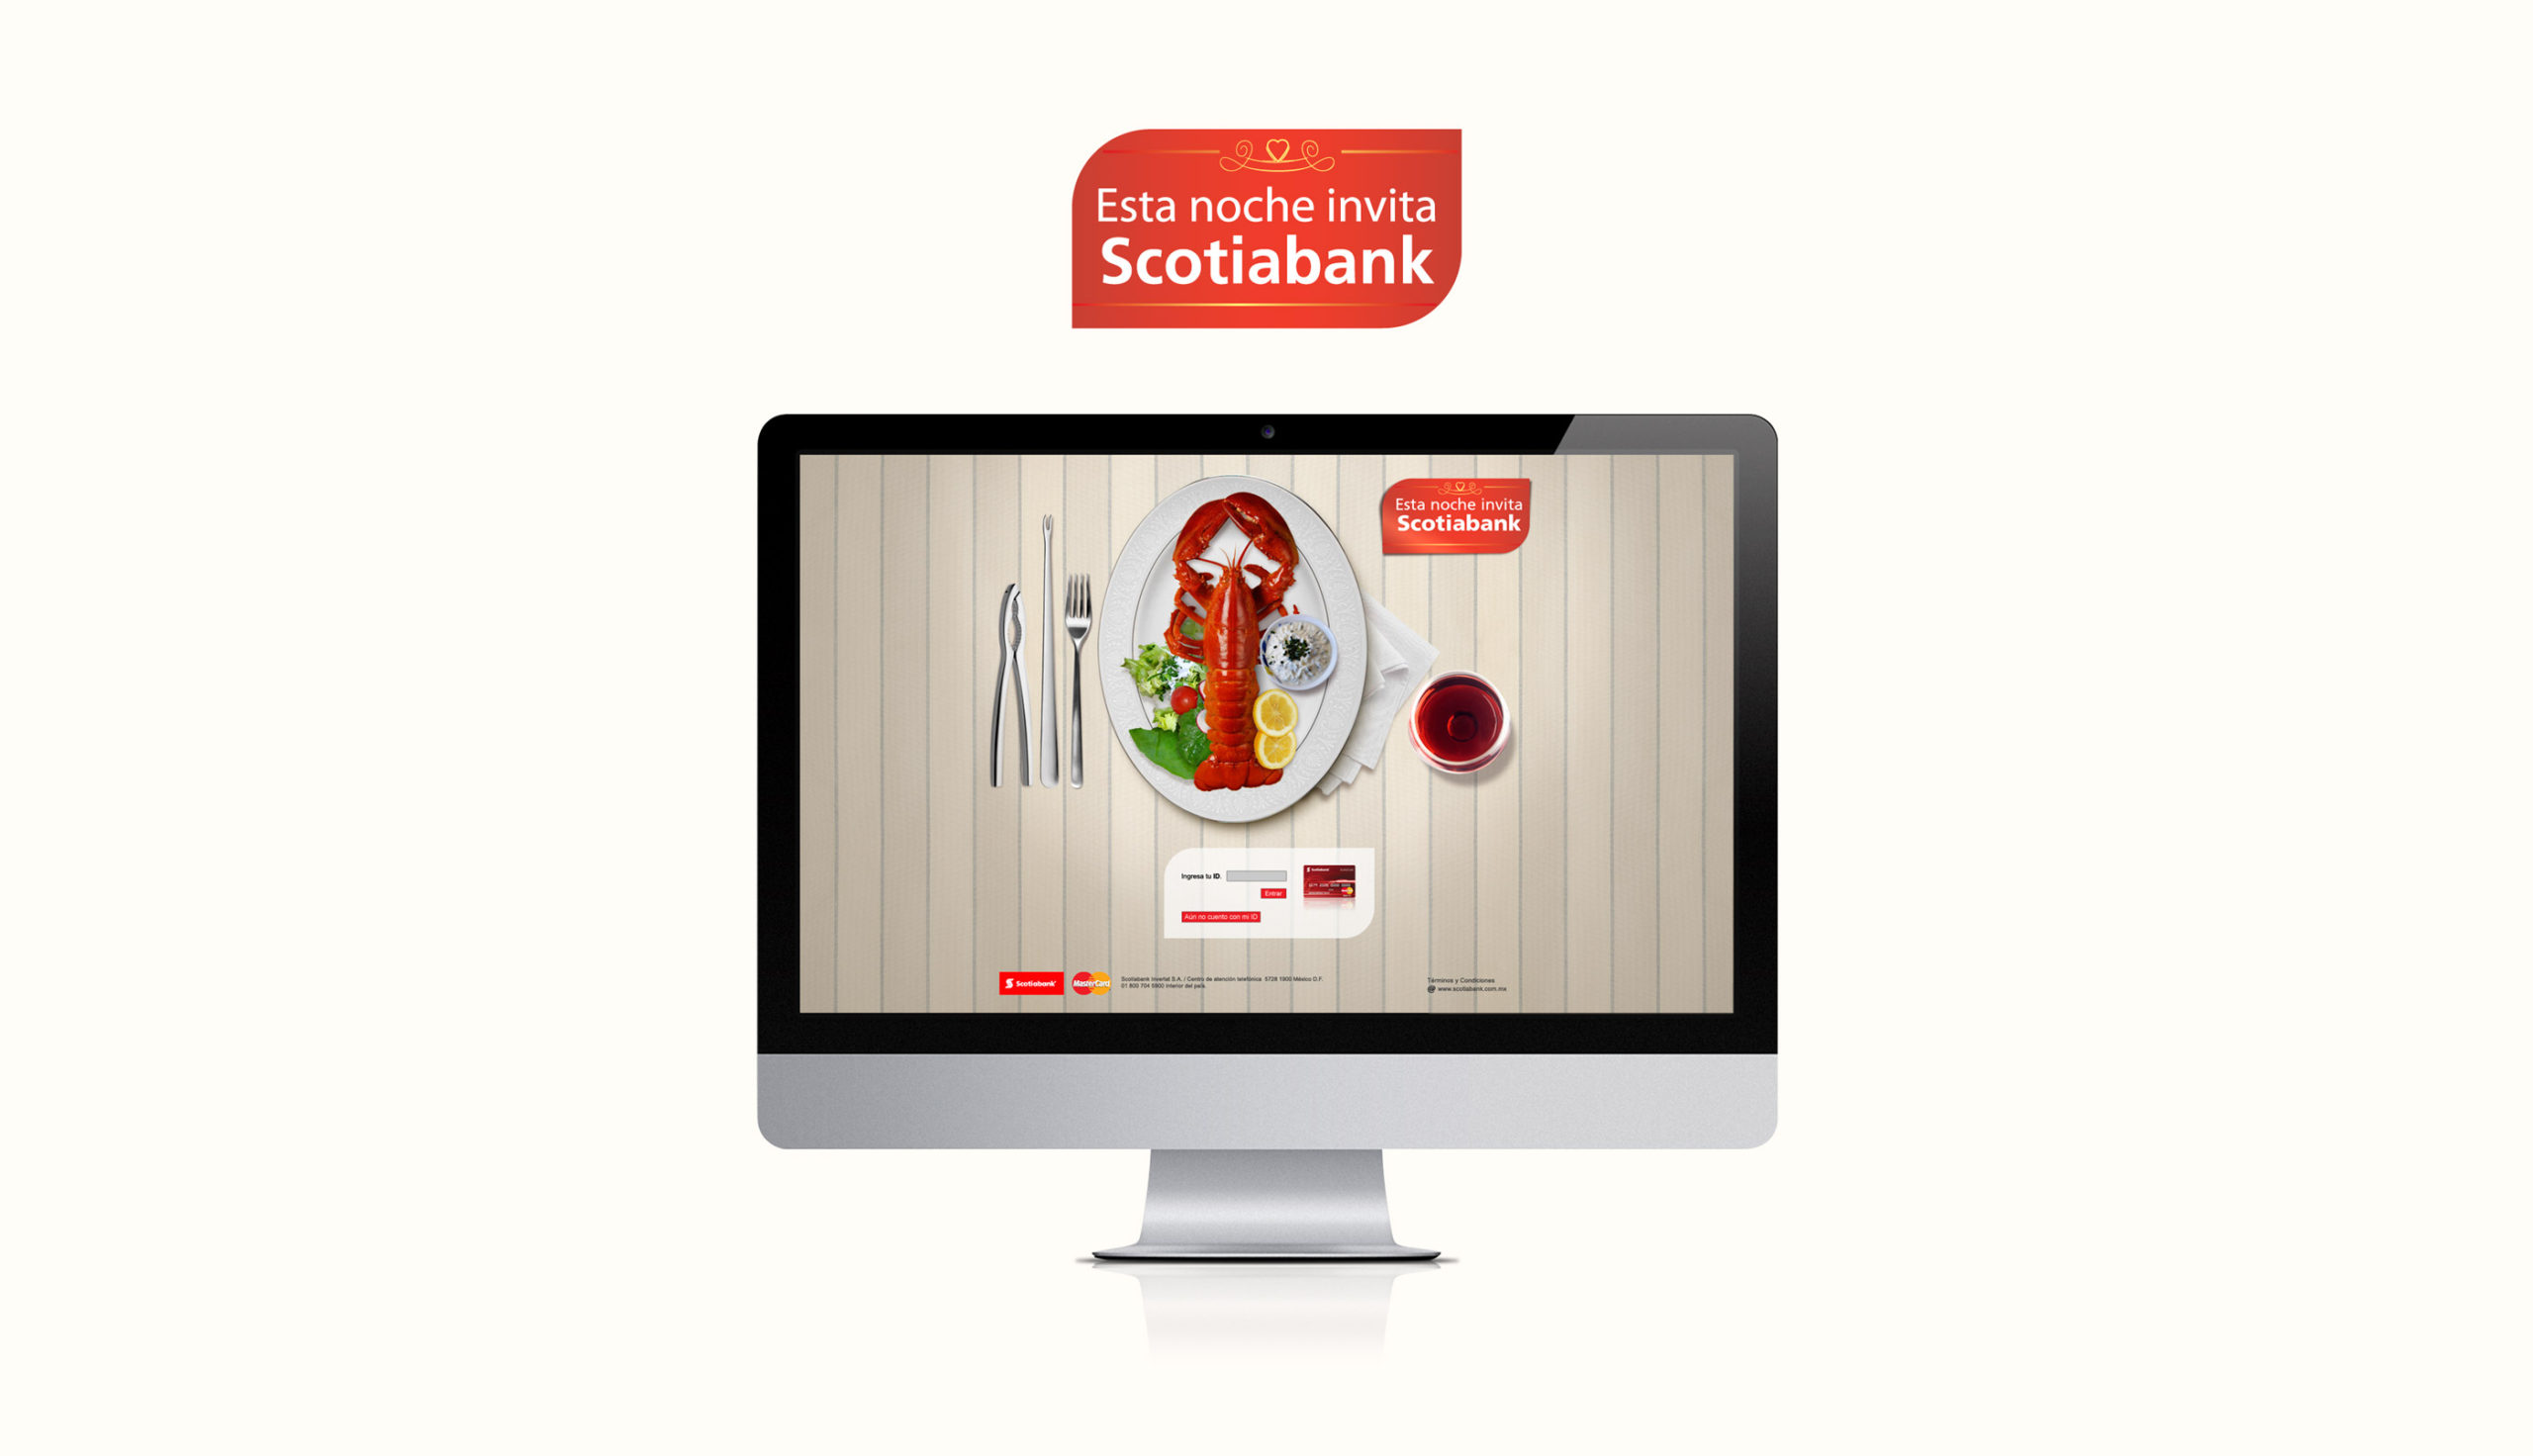 Mockup landing page promo digital / Esta noche invita Scotiabank